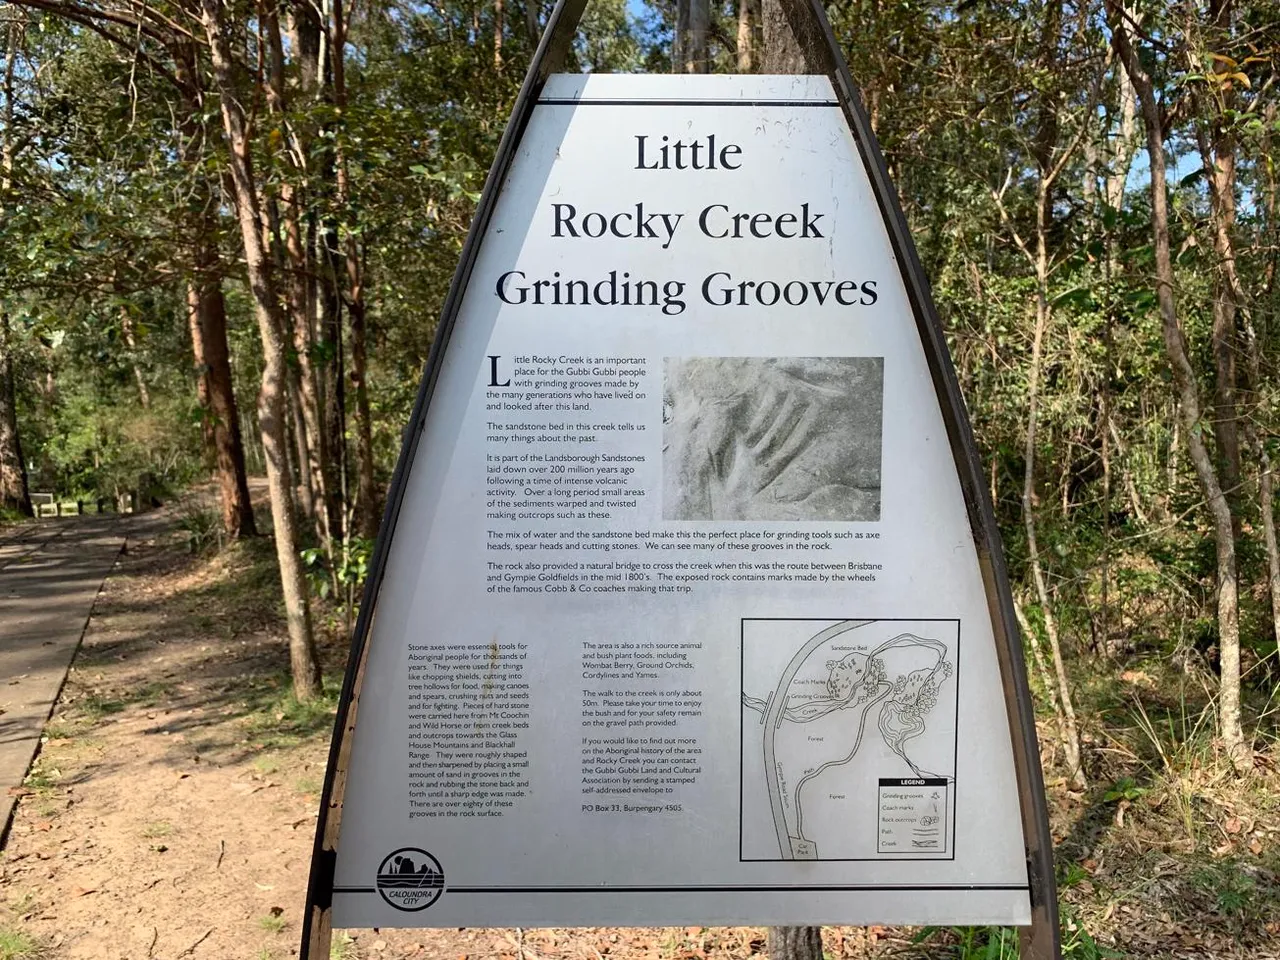  Little Rocky Creek - Axe grinding site